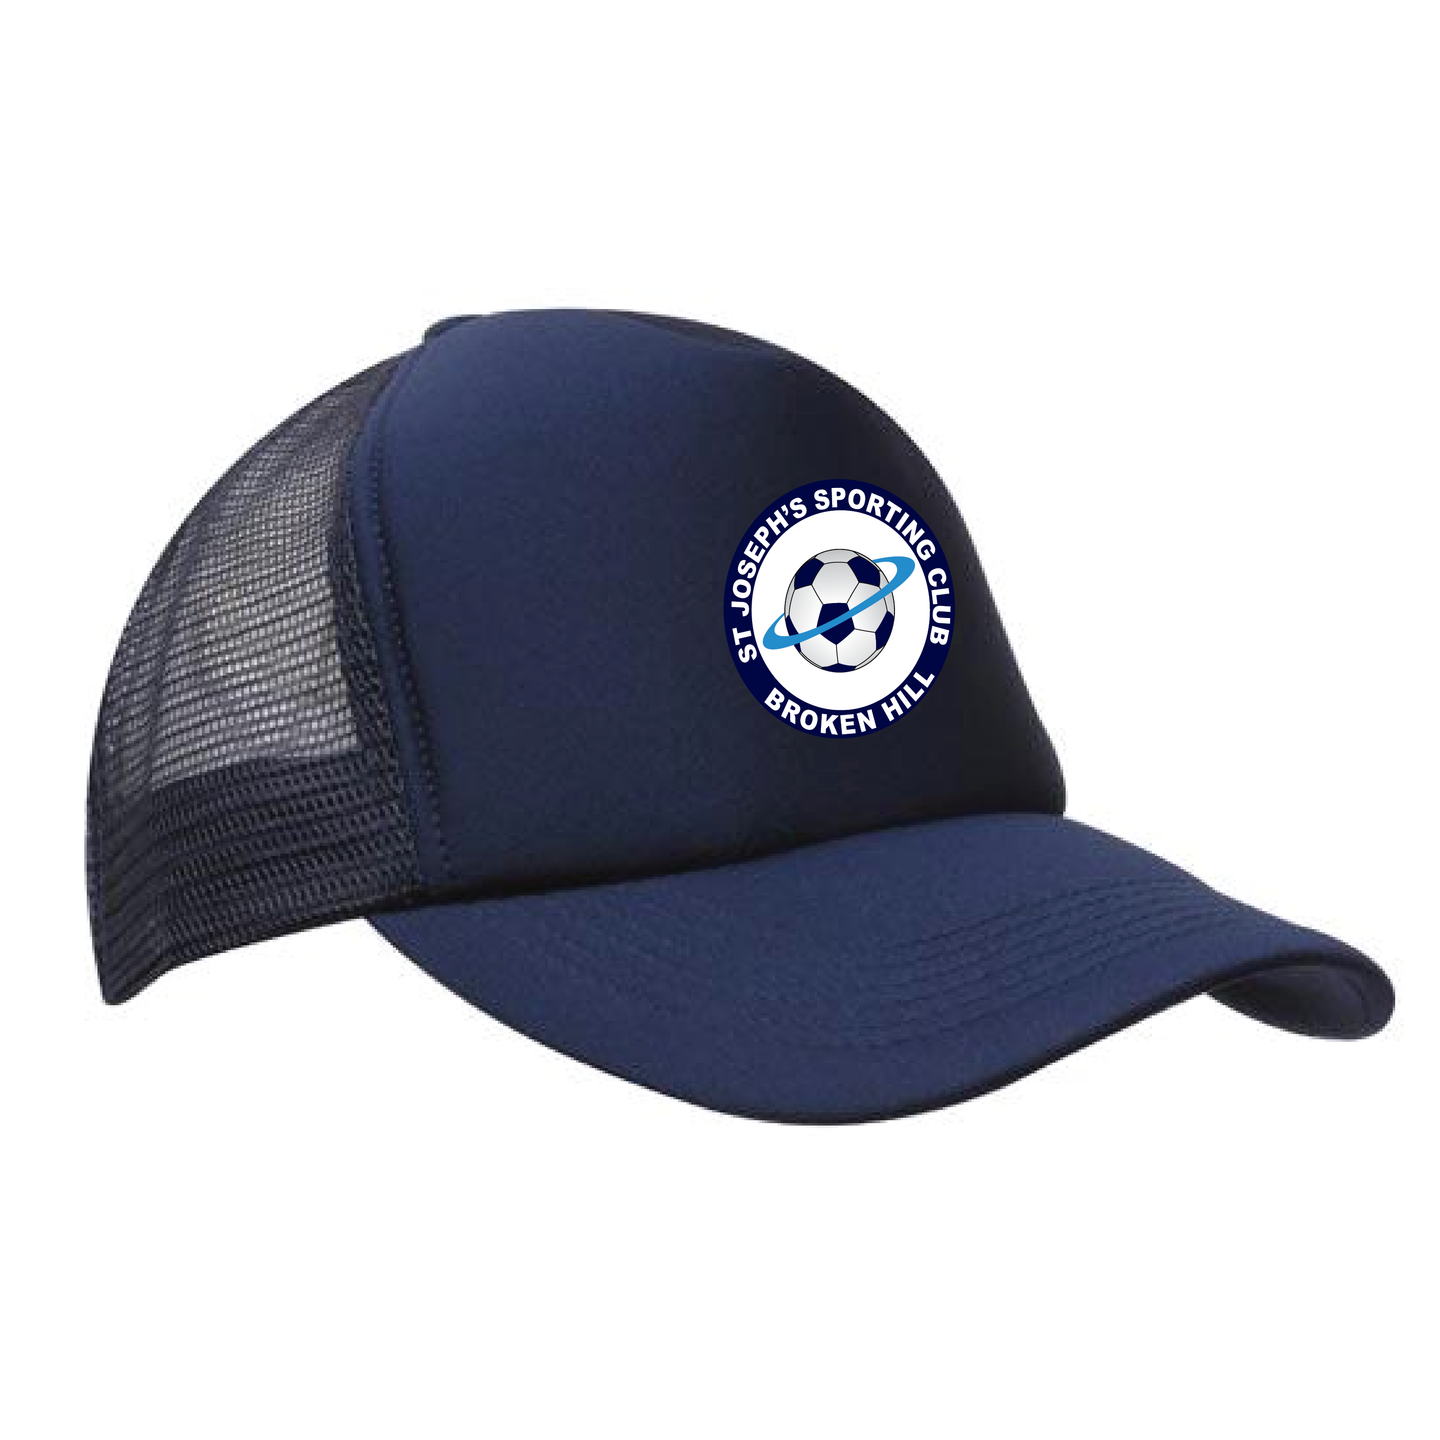 St Joes Trucker Hat - Navy